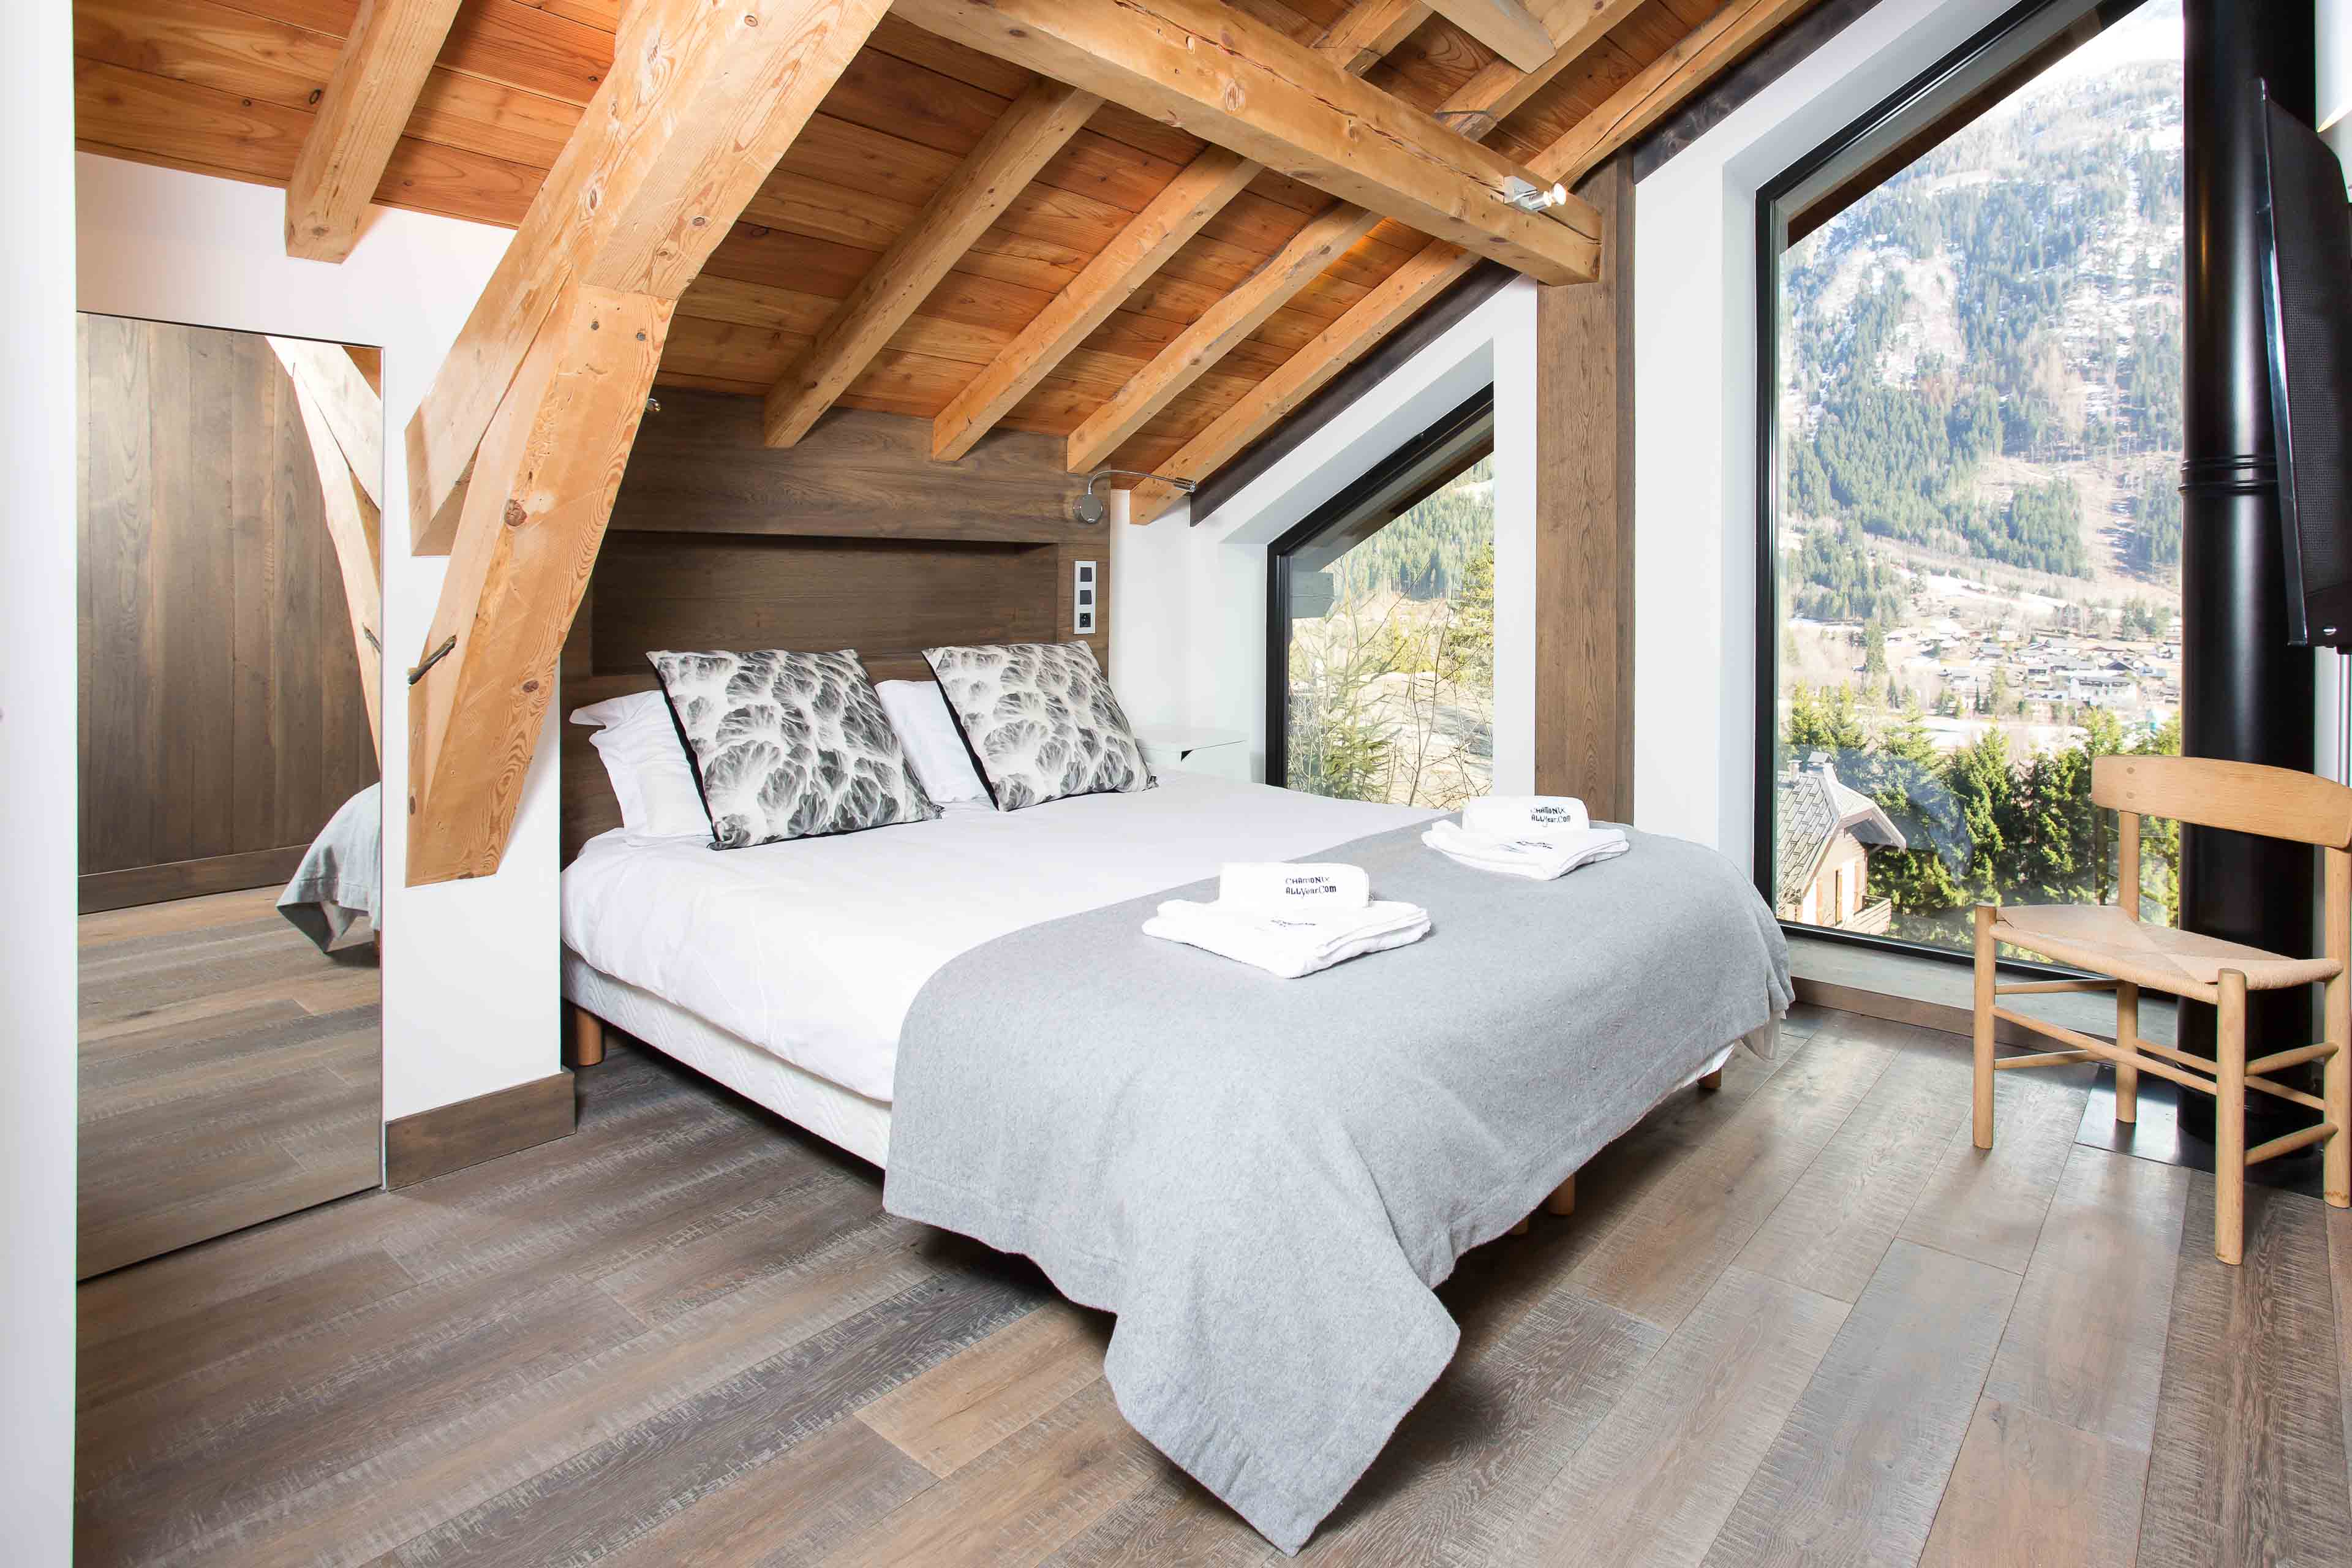 Chamonix accommodation - Working in Chamonix